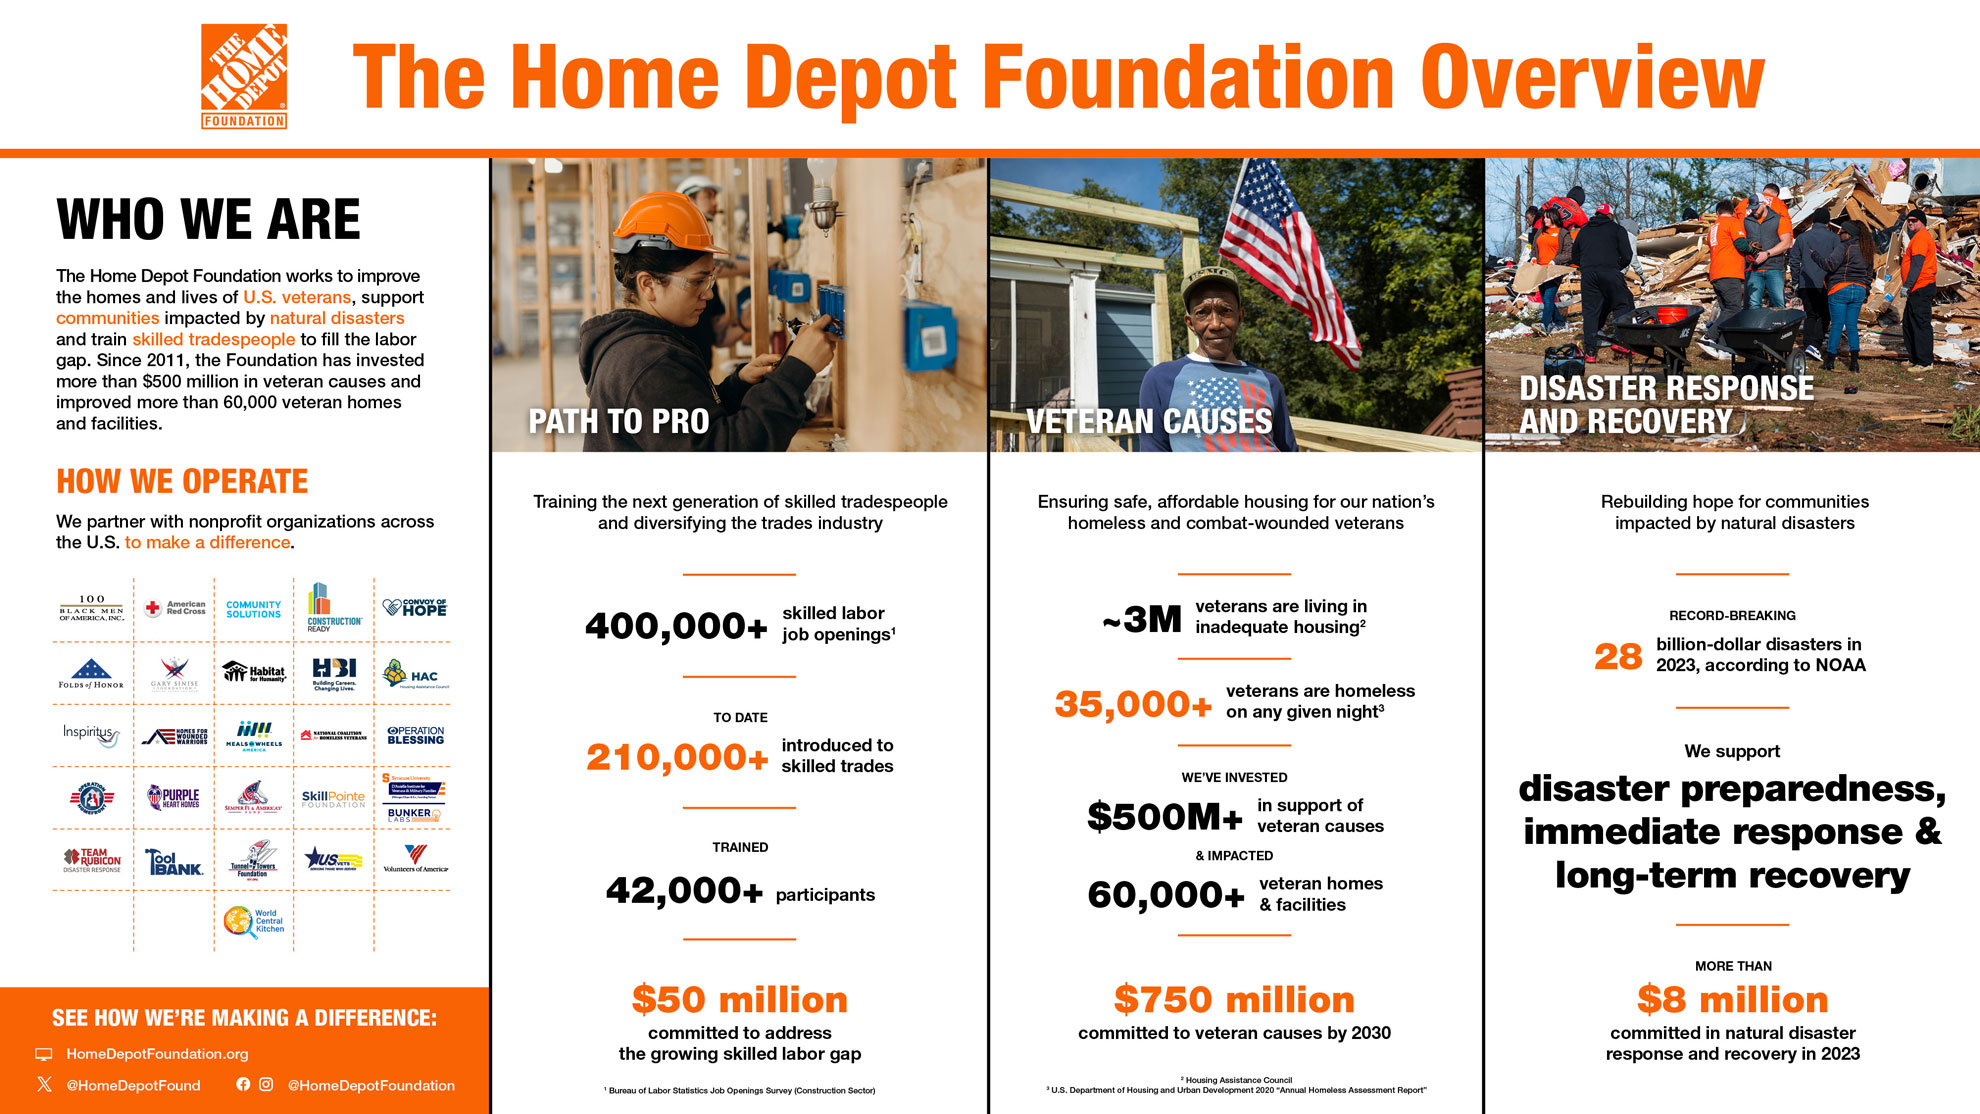 The Home Depot Foundation second quarter infographic describing progress toward goals